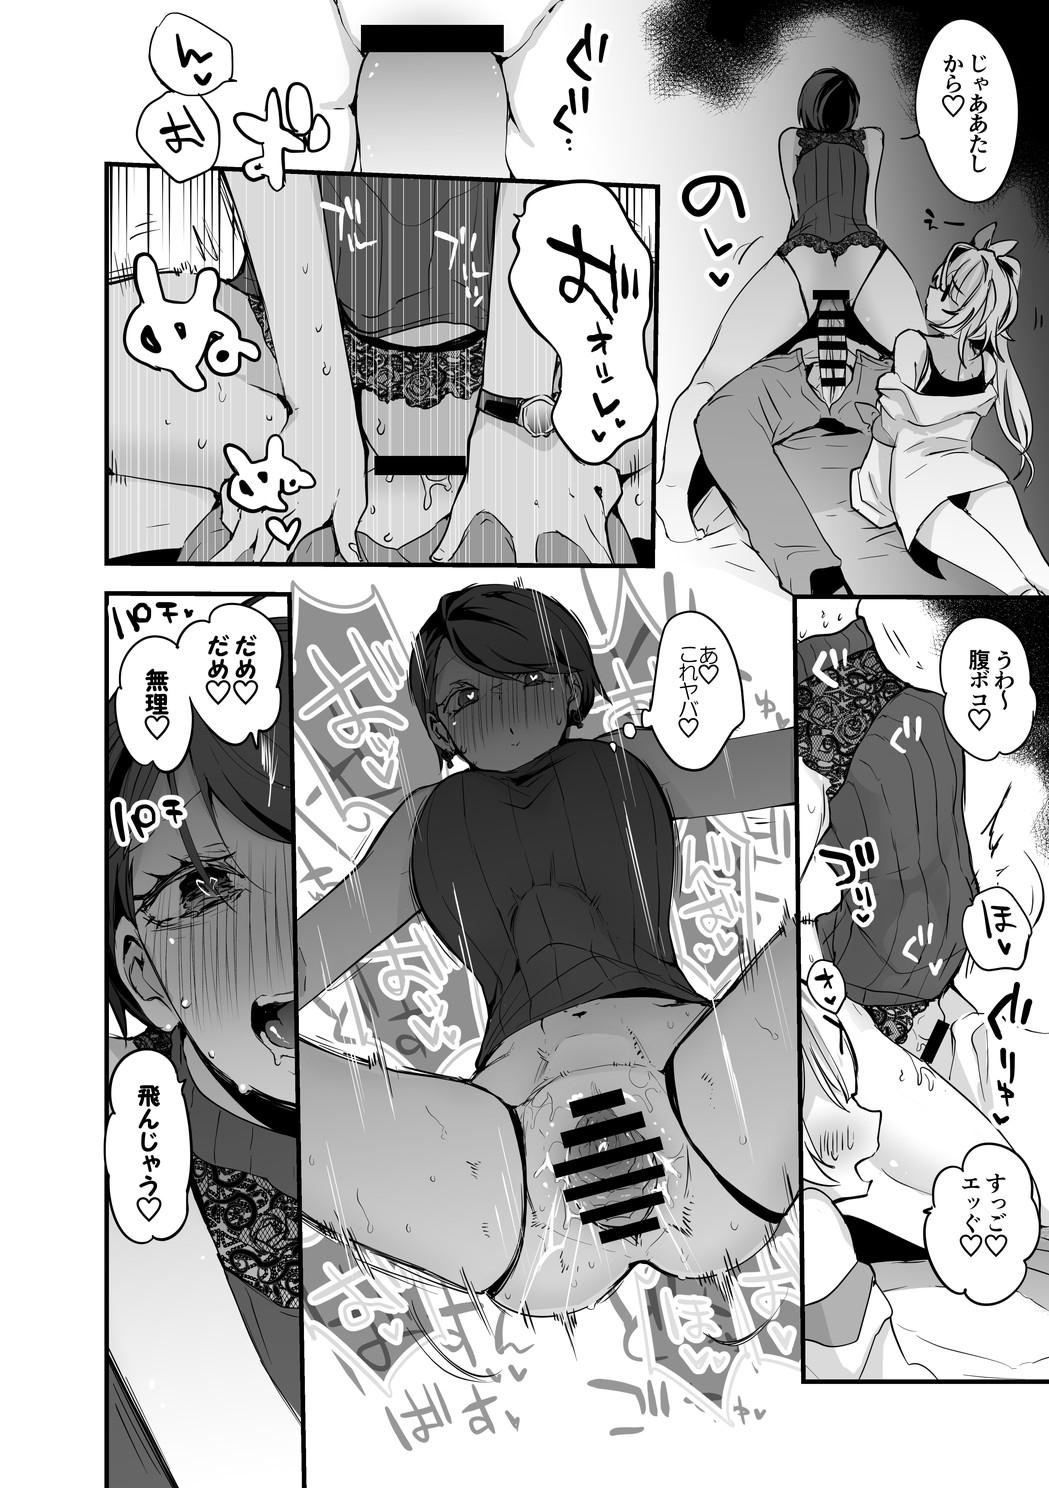 Nasty それ行け炎上流星群編 - Nijisanji Eng Sub - Page 5